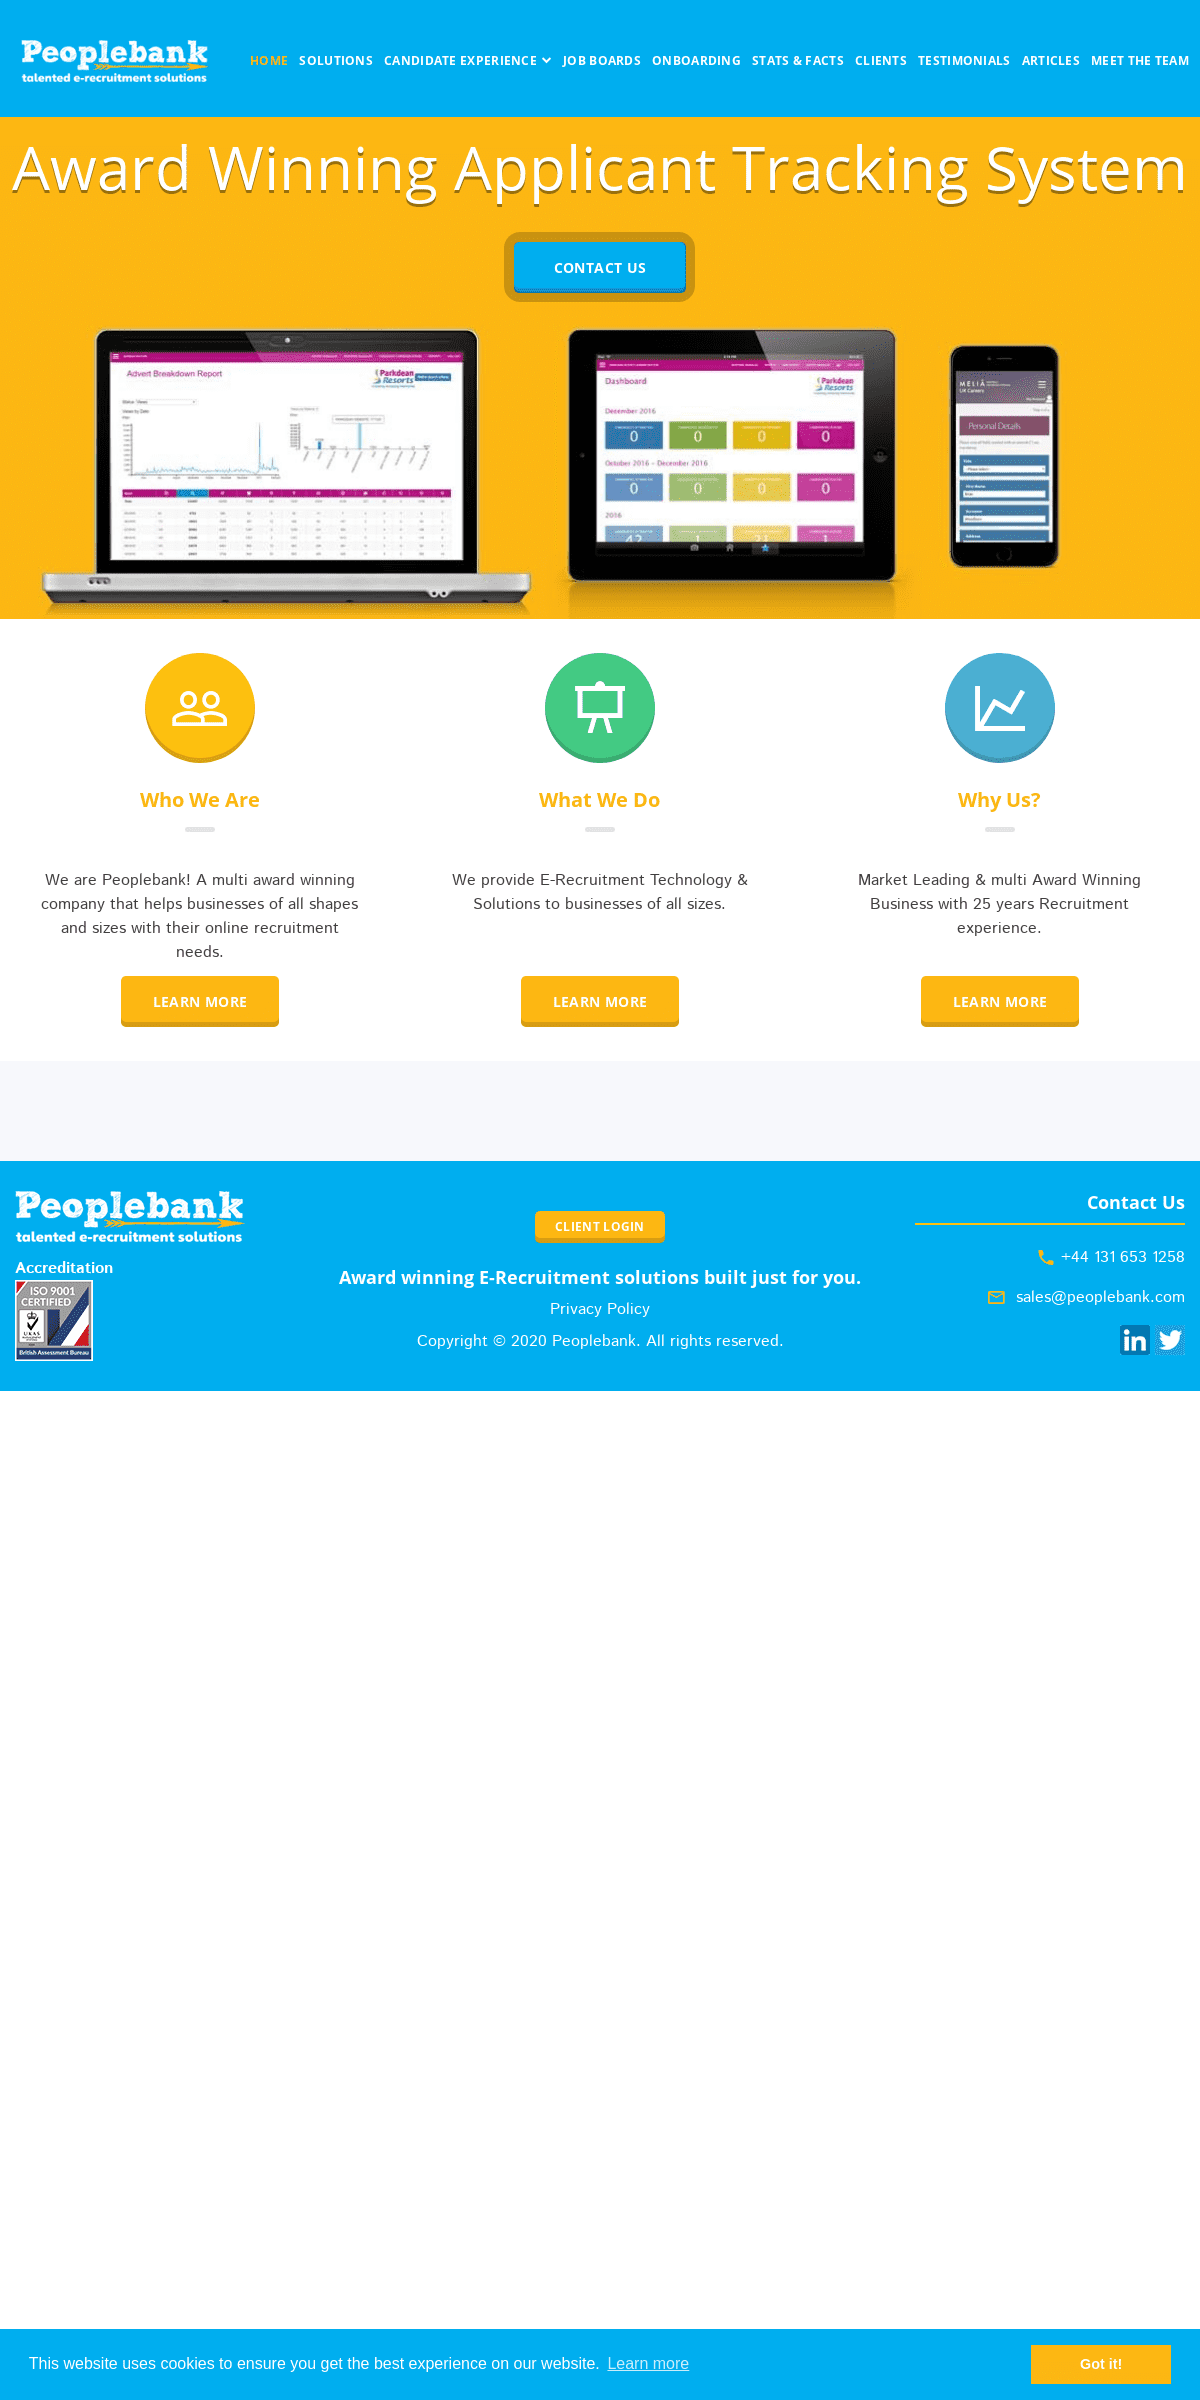 A complete backup of peoplebank.com